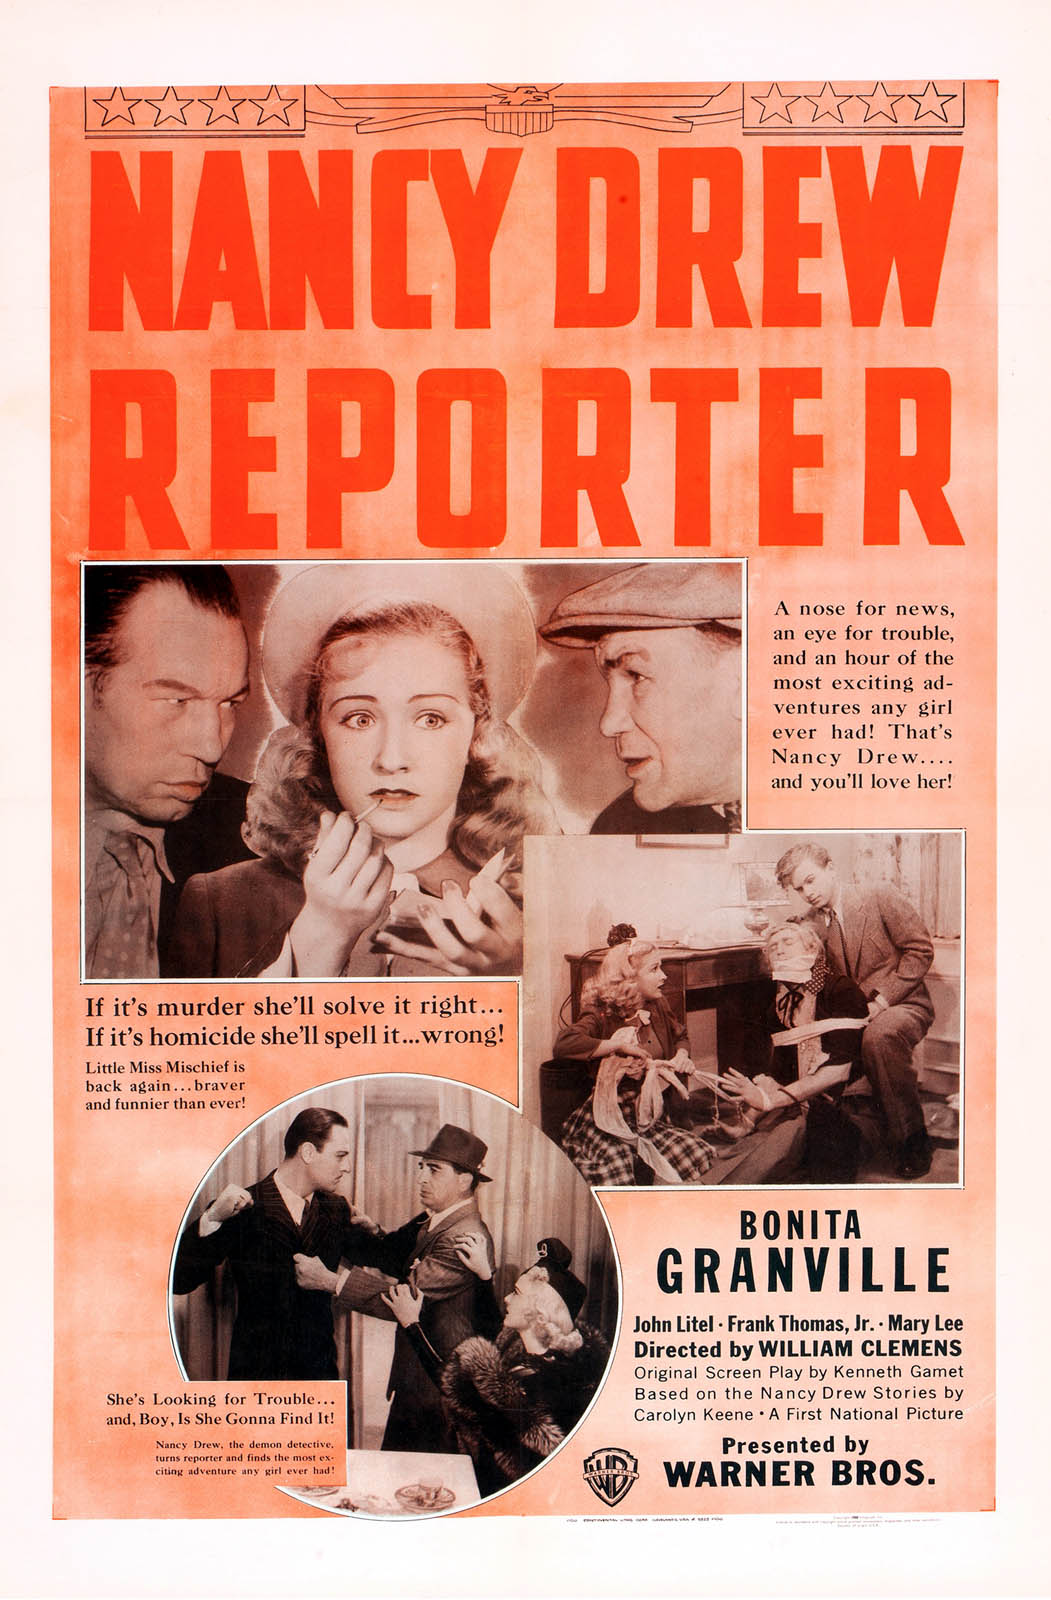 NANCY DREW... REPORTER